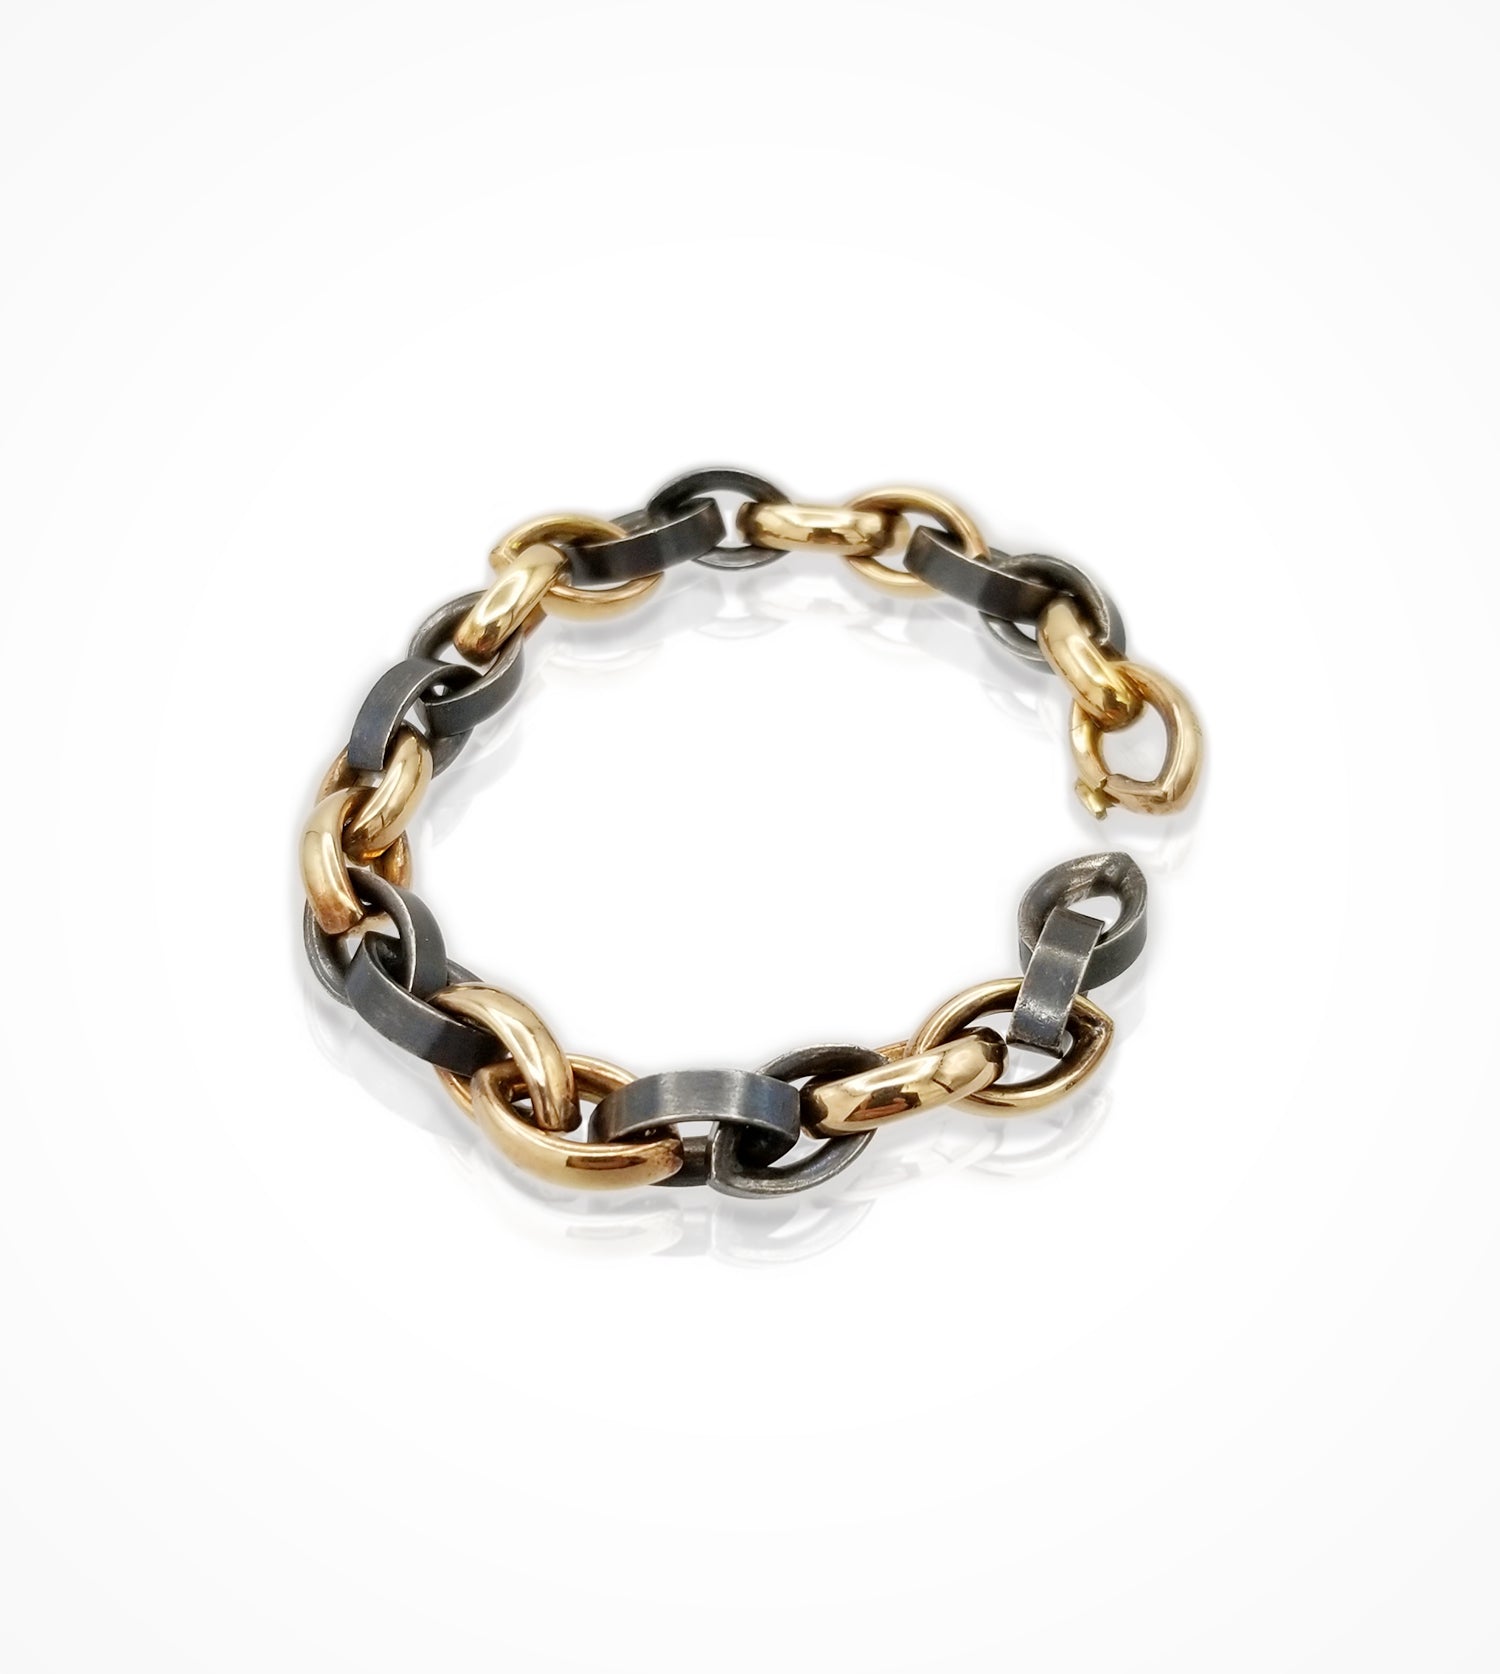 BR07315-Silver & 18kt pink gold marquise-shape link bracelet,1diamond=0.02ct